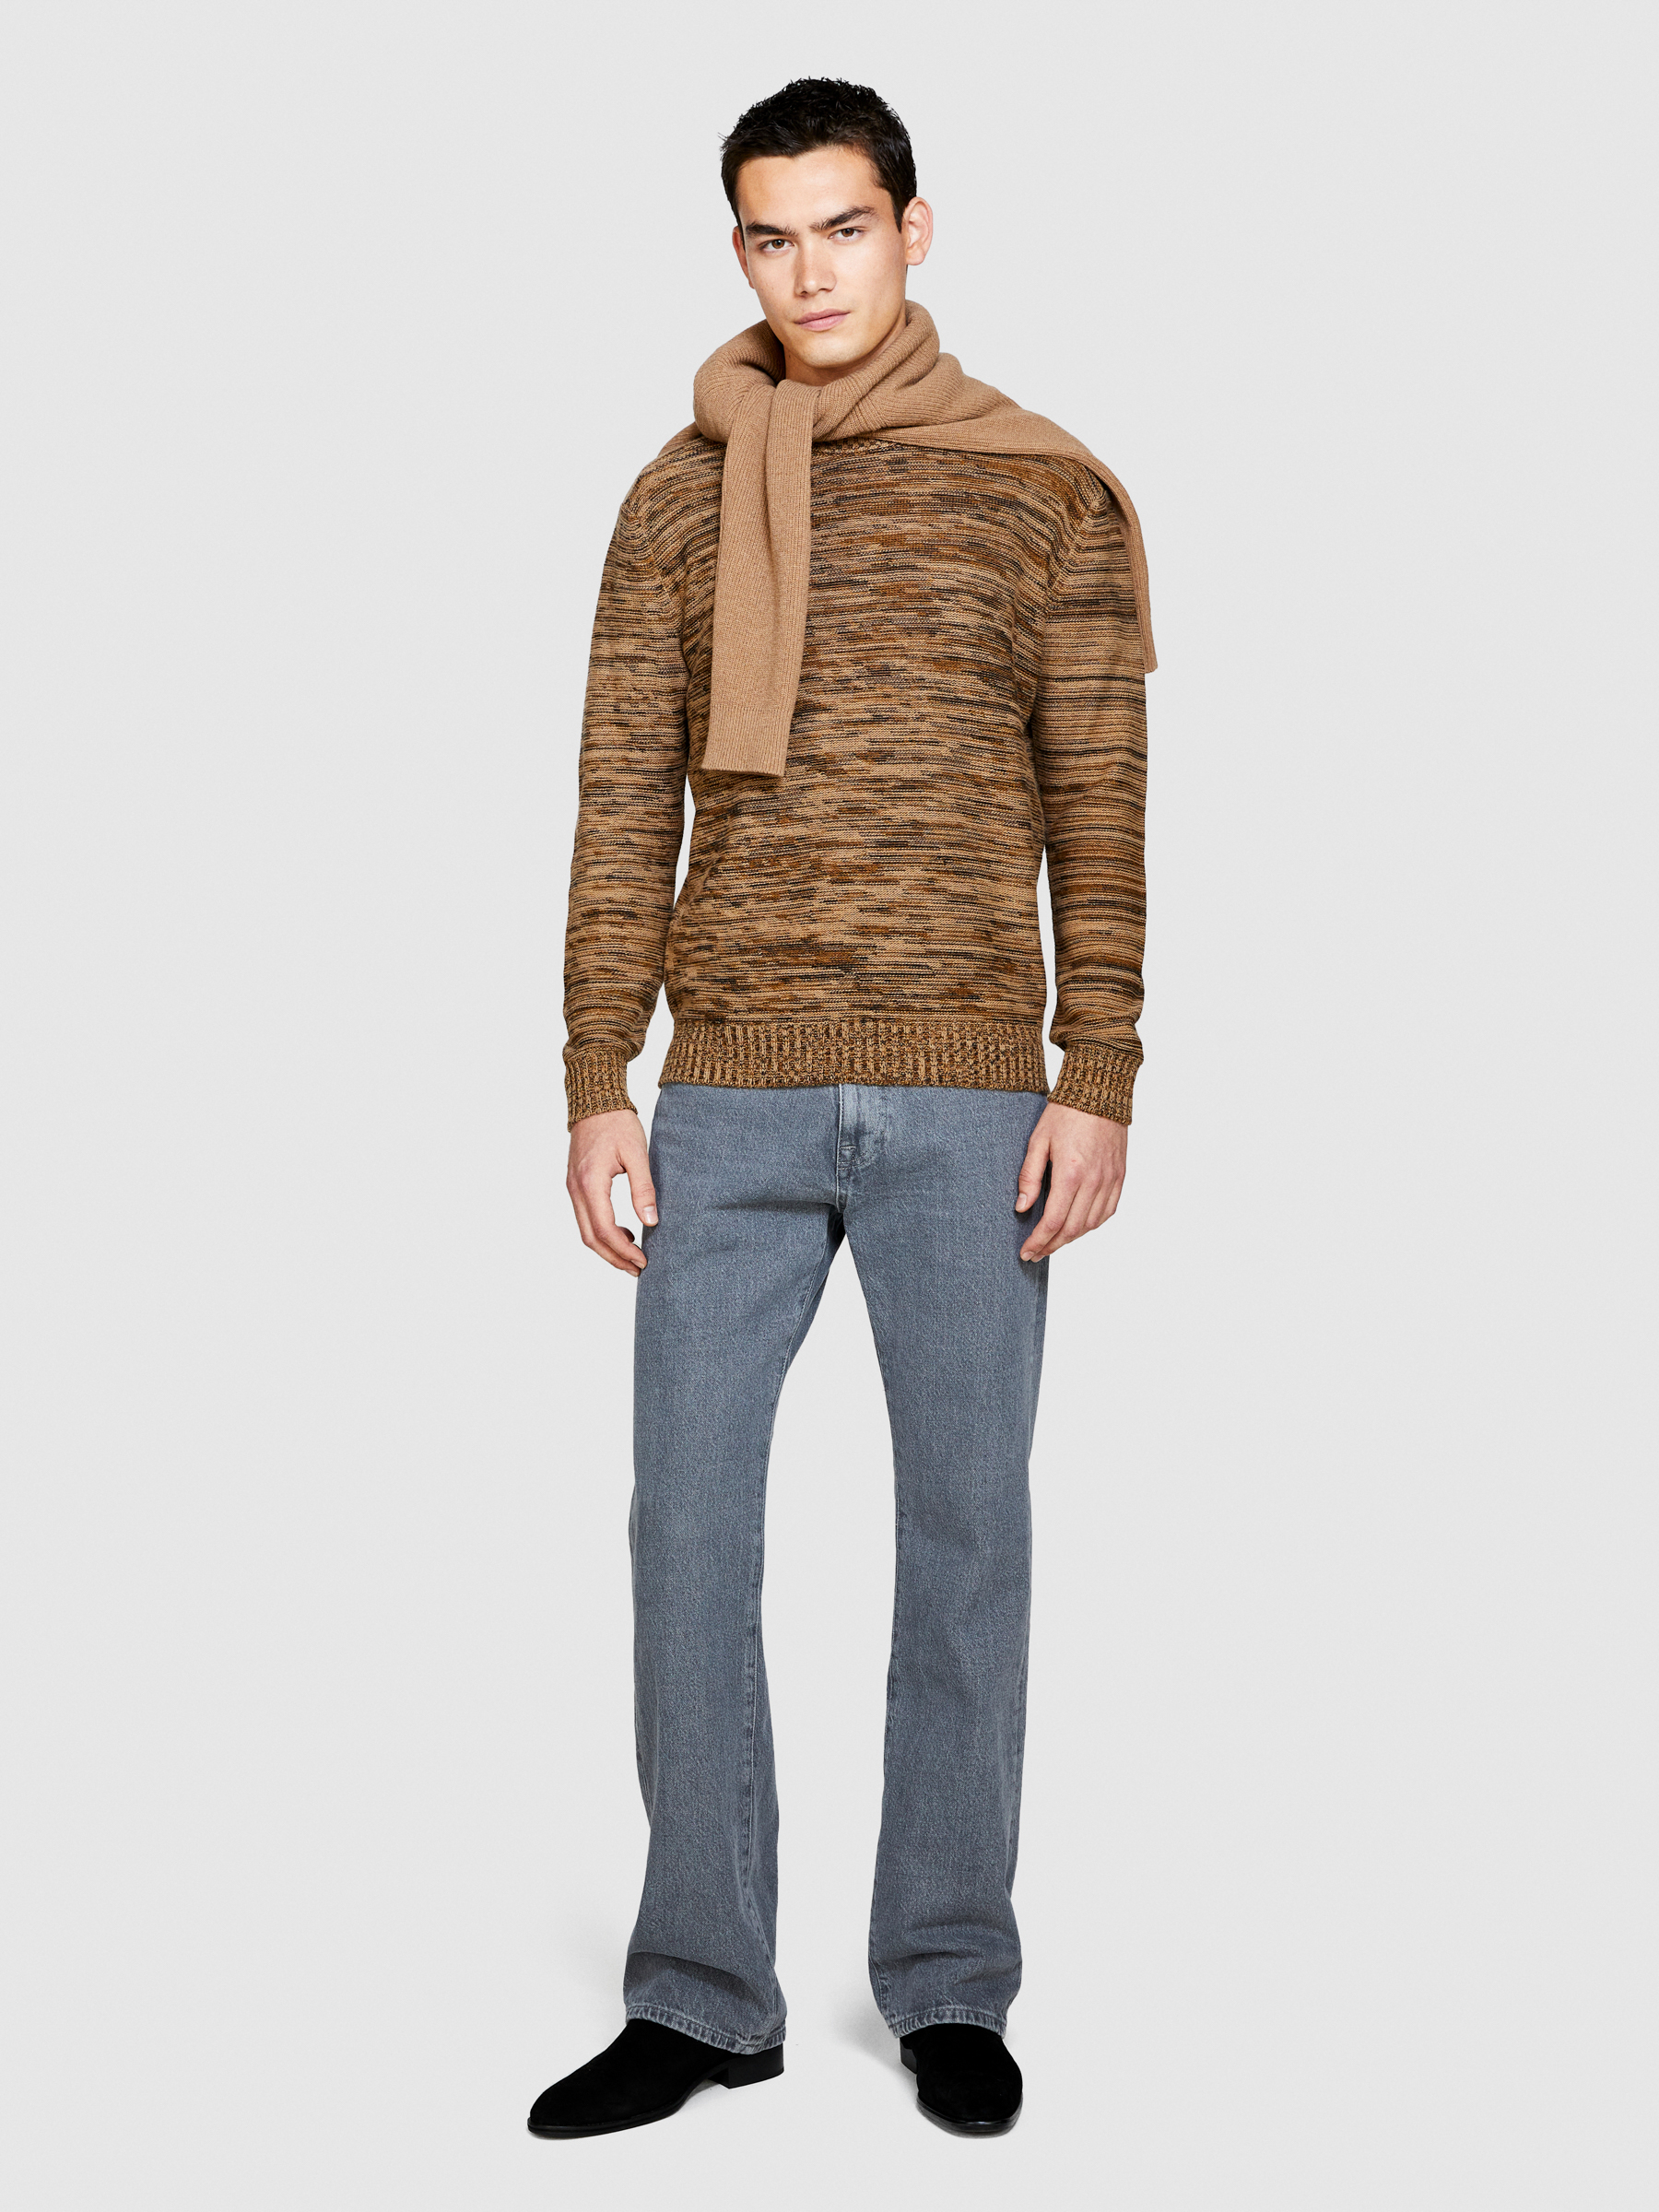 Sisley - Blurred Look Sweater, Man, Camel, Size: XL